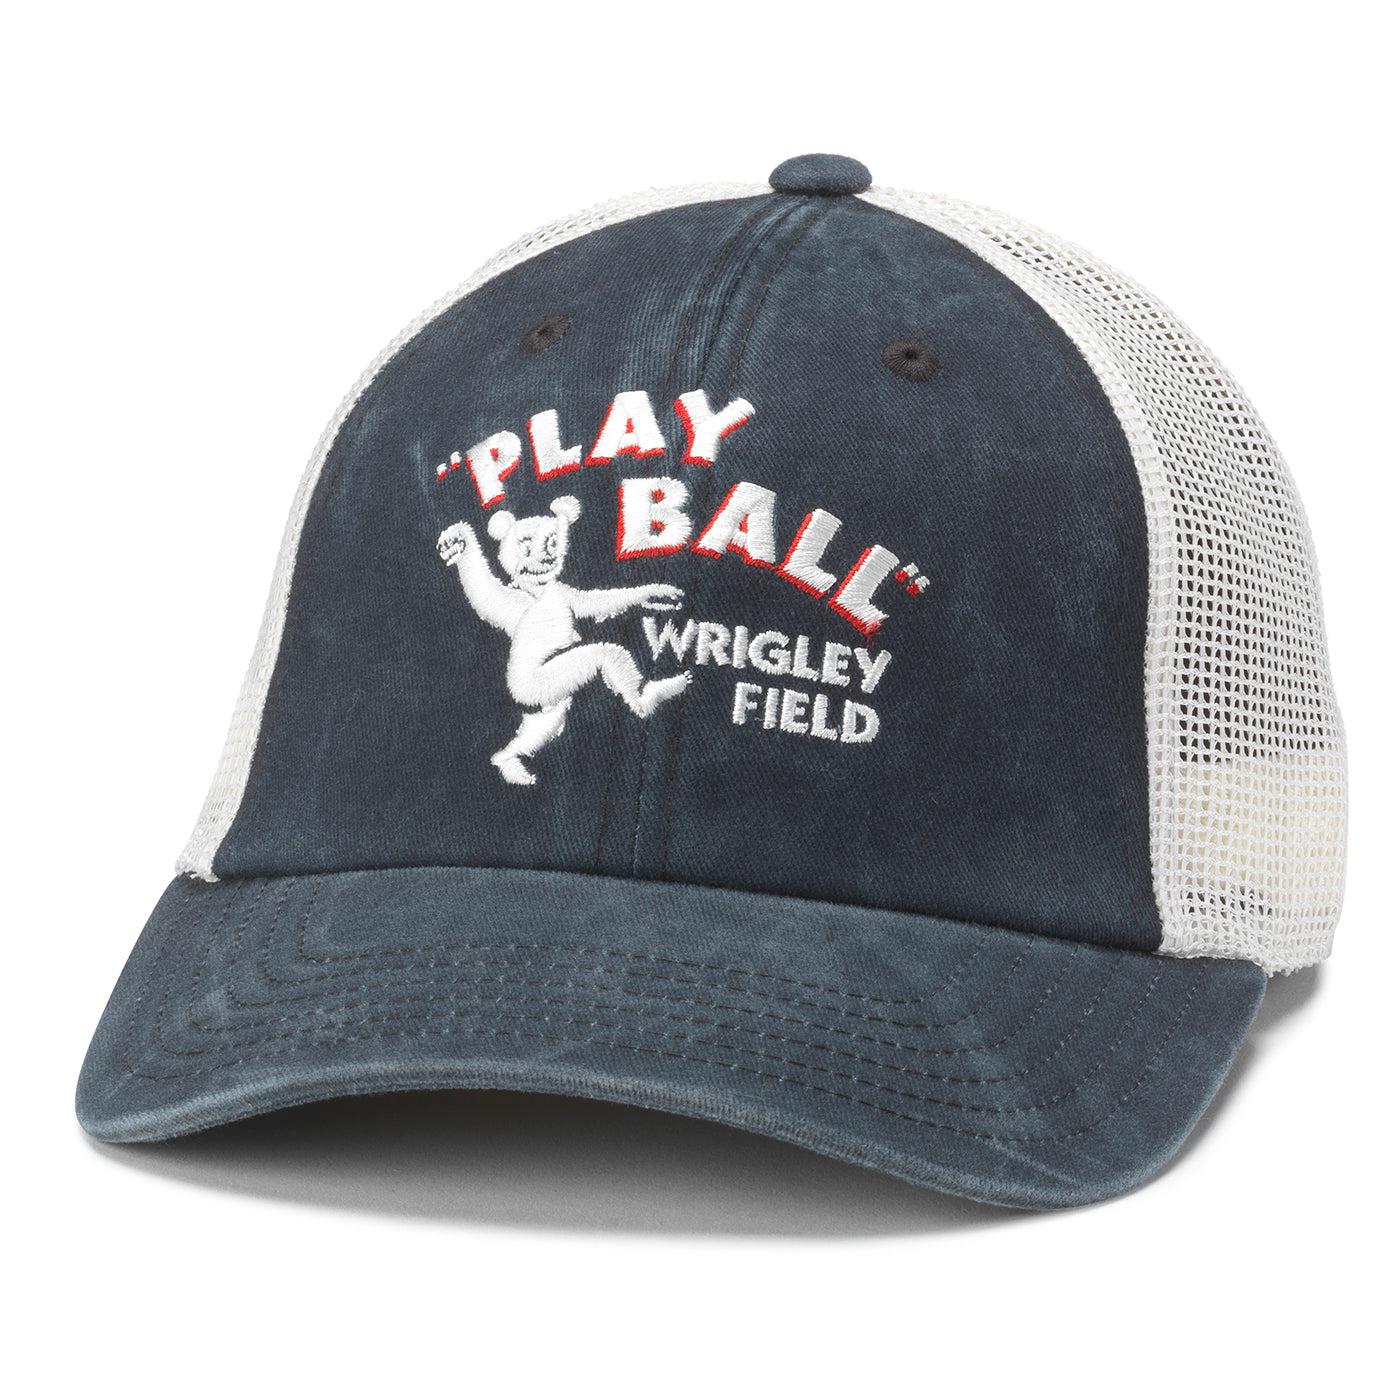 WRIGLEY FIELD AMERICAN NEEDLE NEW SCHOOL PLAY BALL CAP